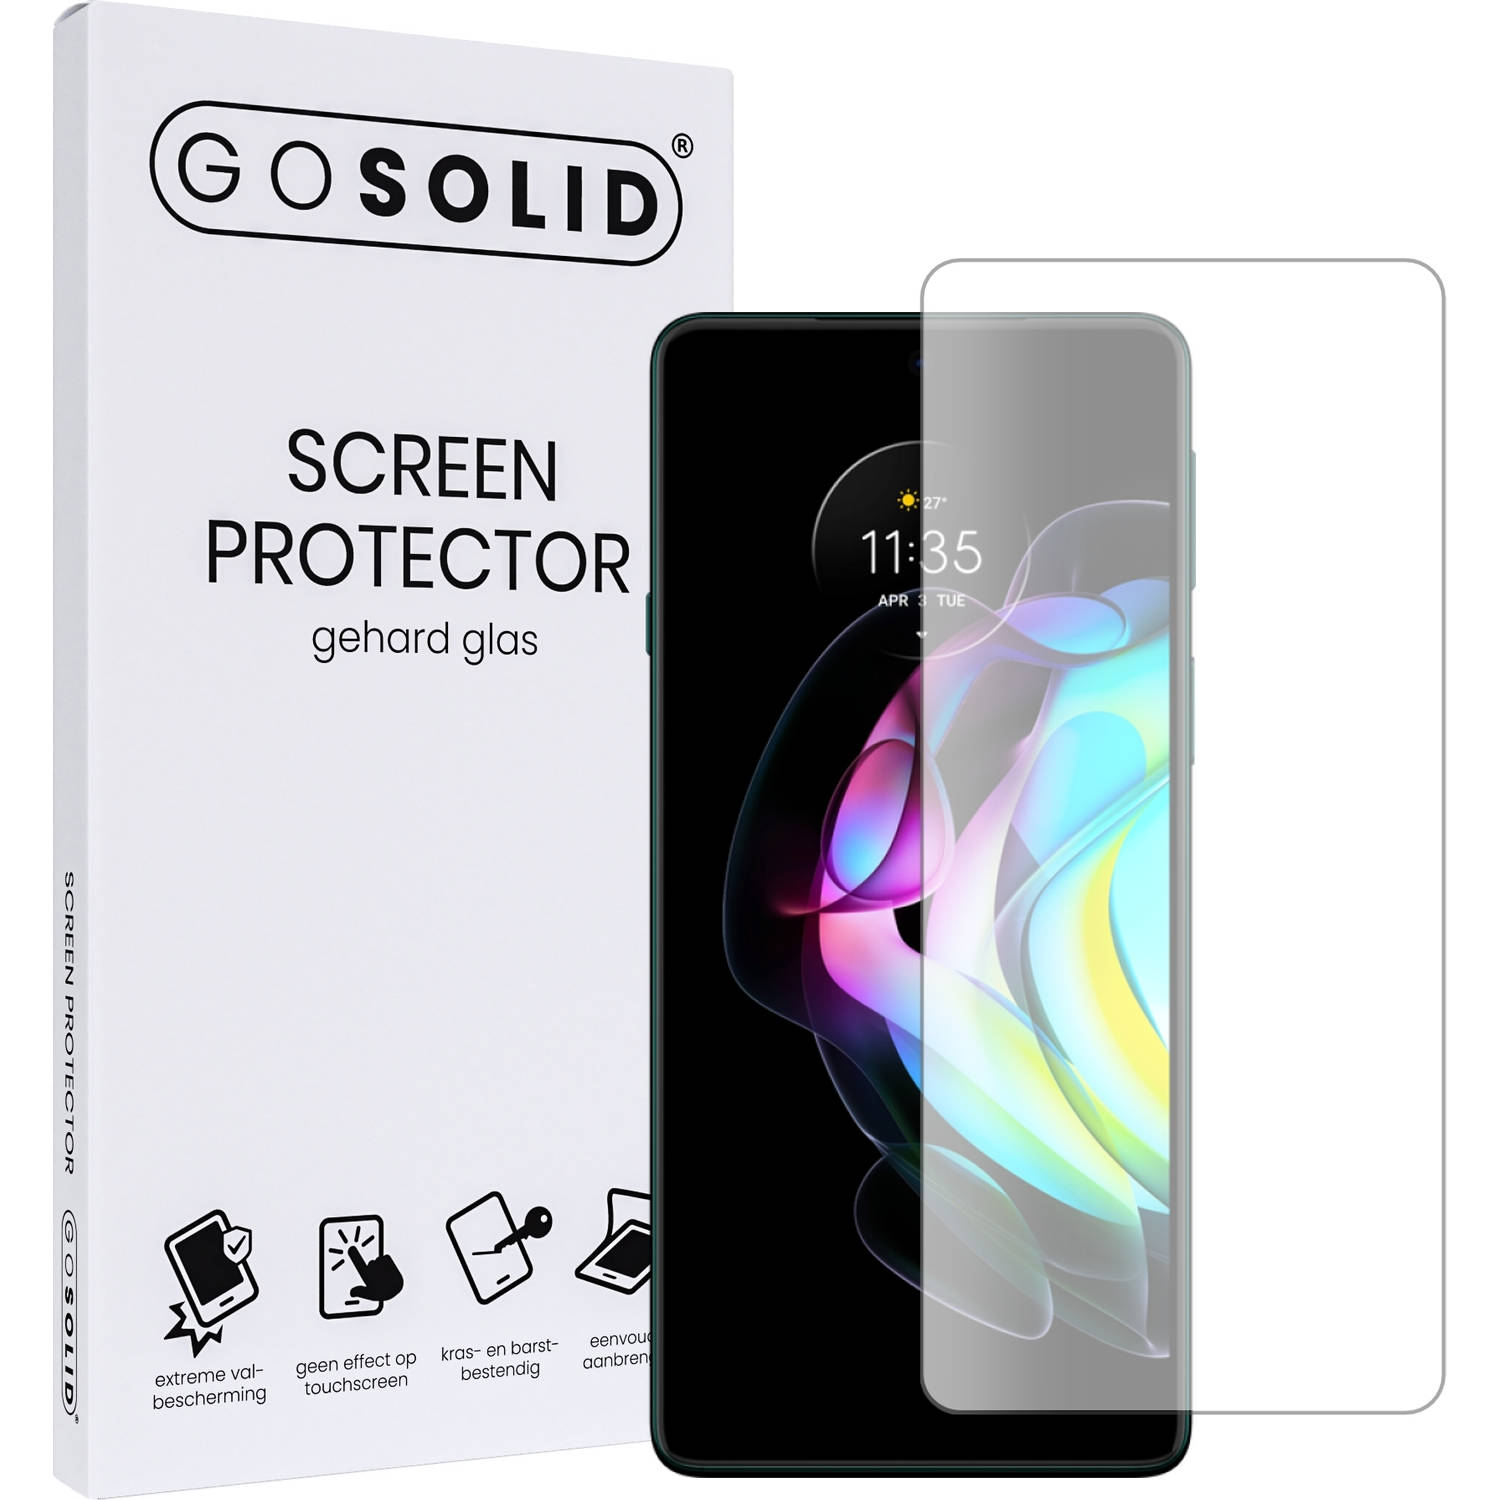 GO SOLID! Screenprotector voor Motorola Edge 20 gehard glas